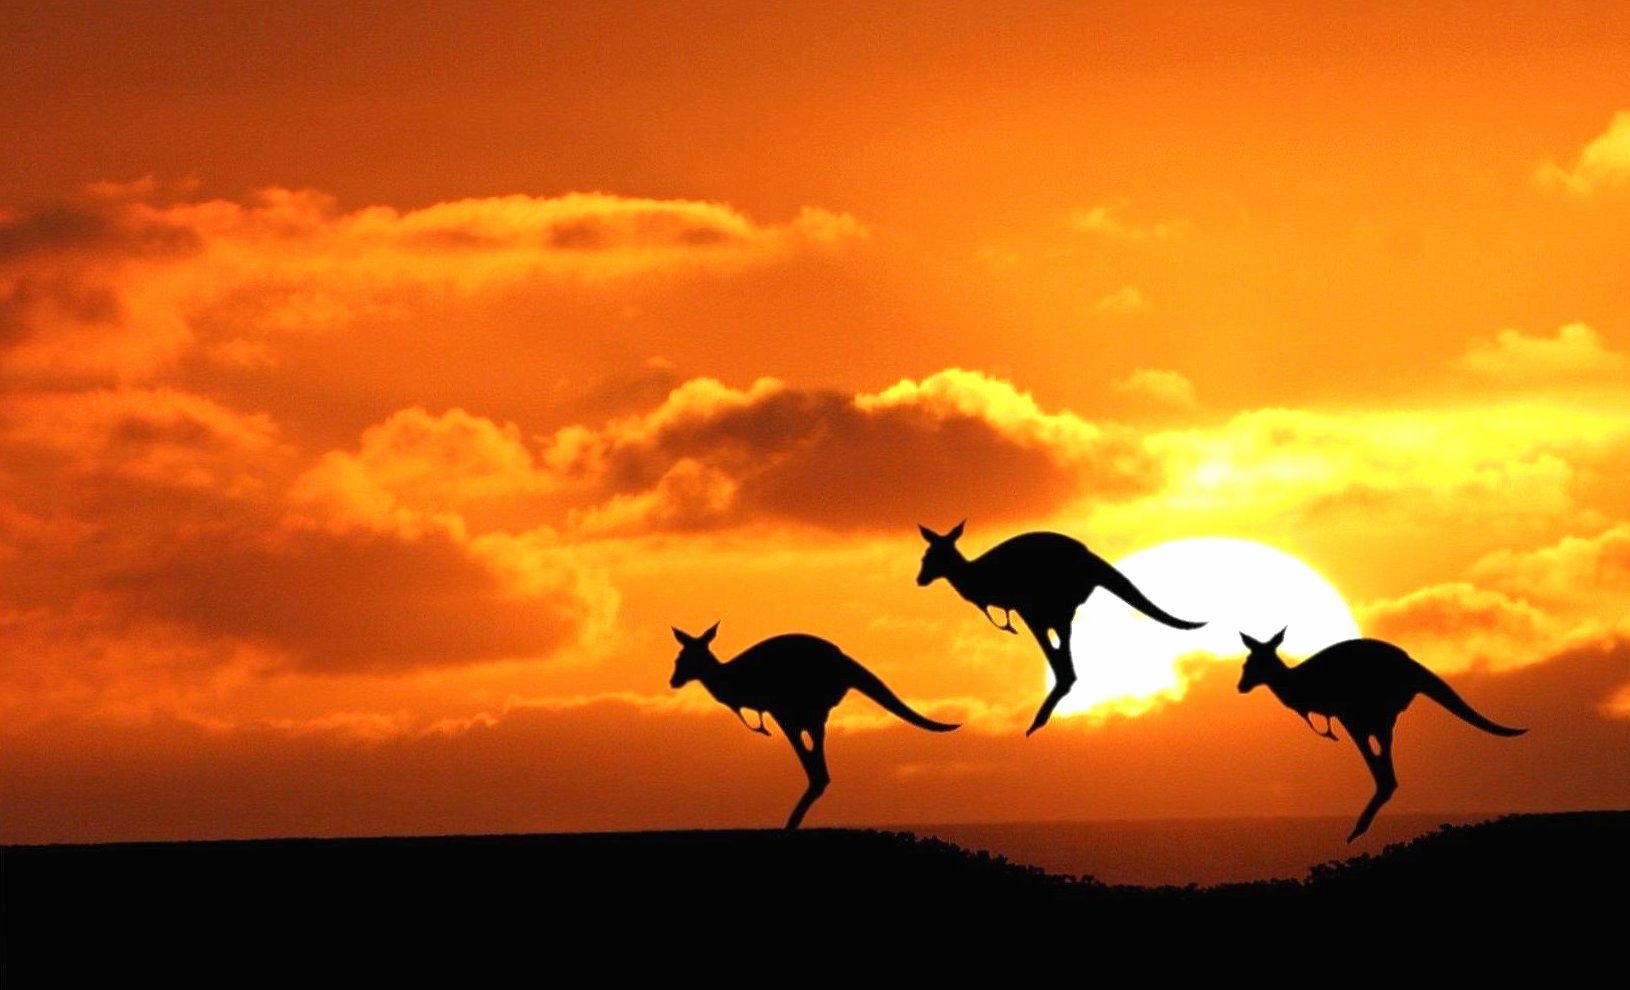 Sunset kangaroo at 2048 x 2048 iPad size wallpapers HD quality